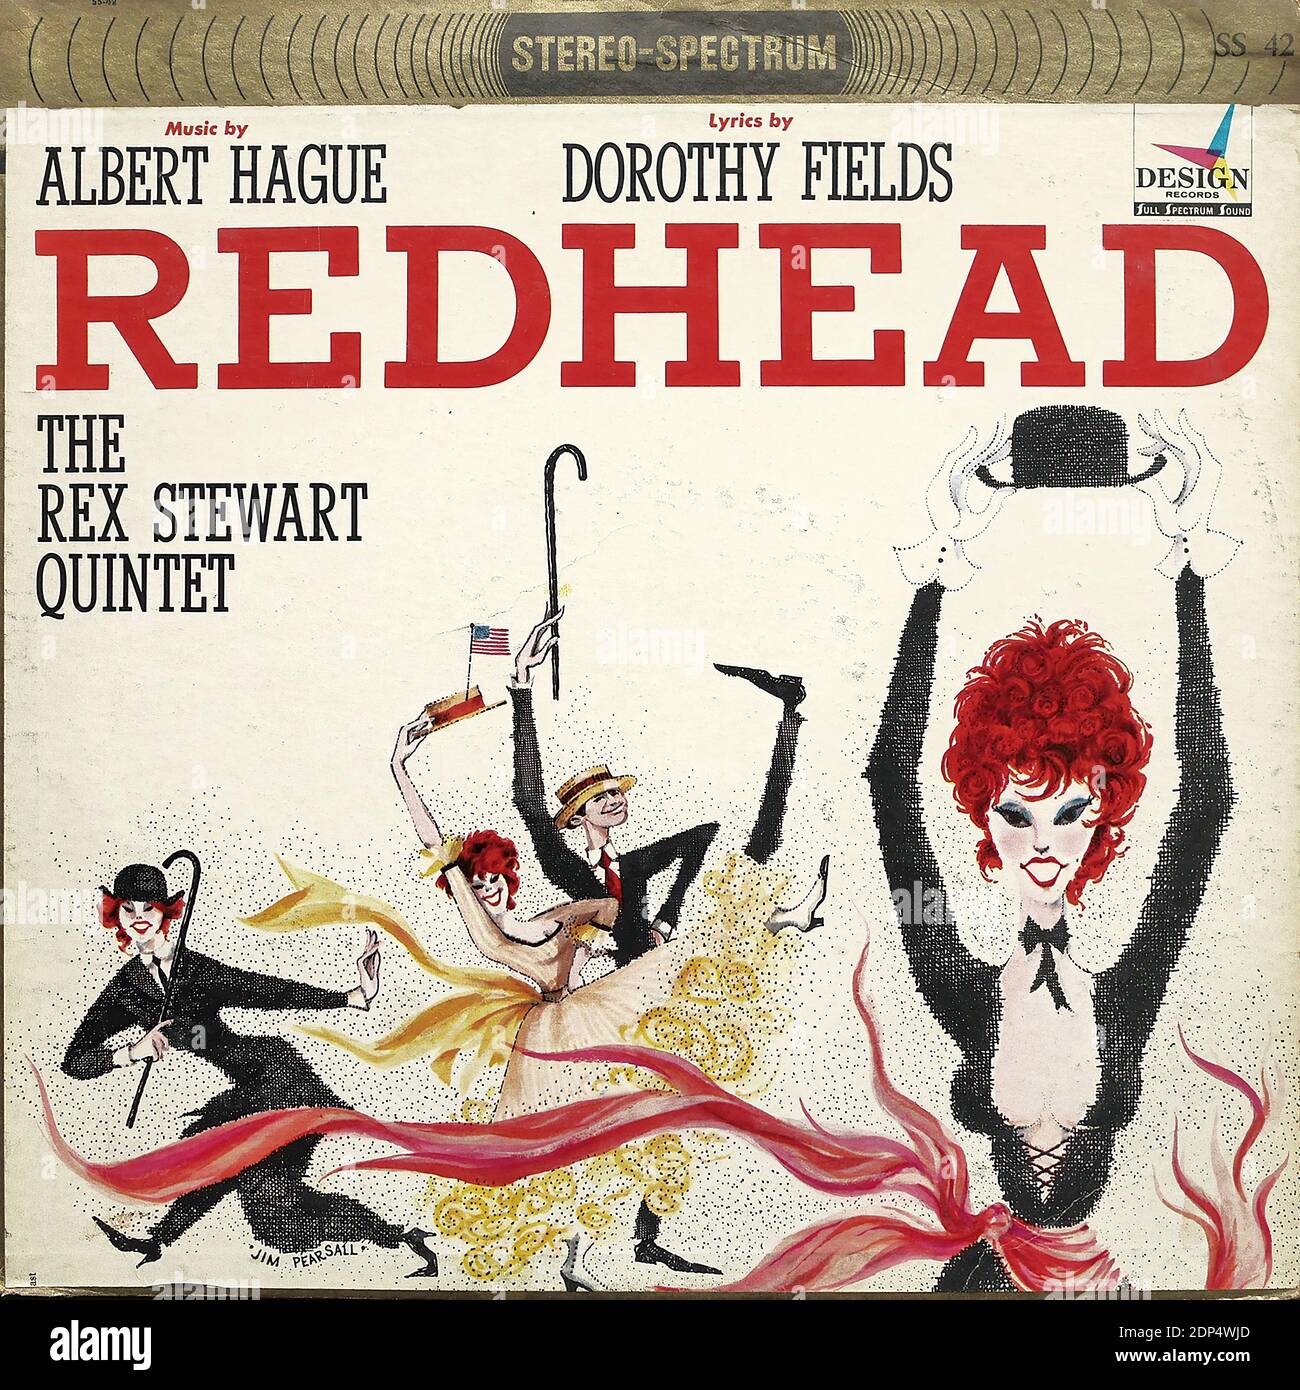 The Rex Stewart Quintet - Redhead, Stereo Spectrum Records SS 42, 1958 - Vintage Vinyl Album Cover Stockfoto